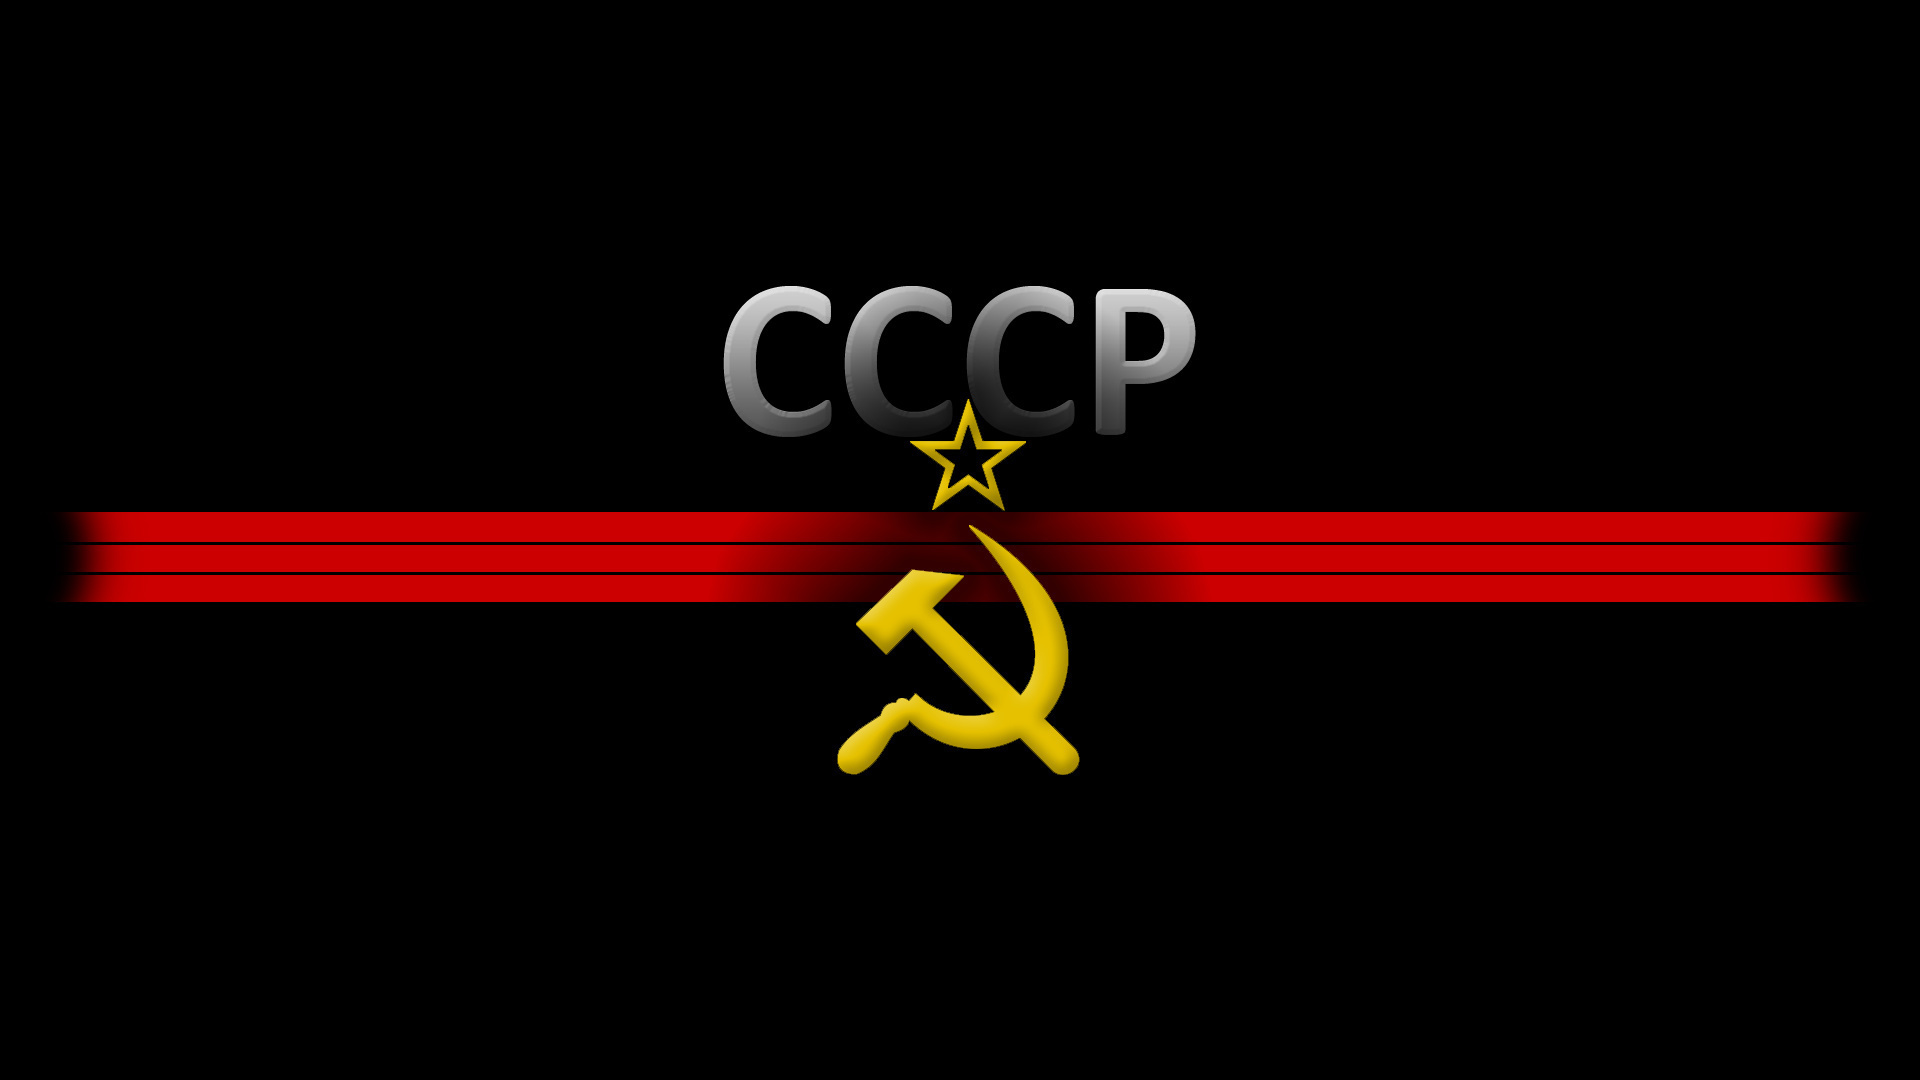 Soviet Union Wallpaper Pc Q9zz8s9 Wallpaperexpert